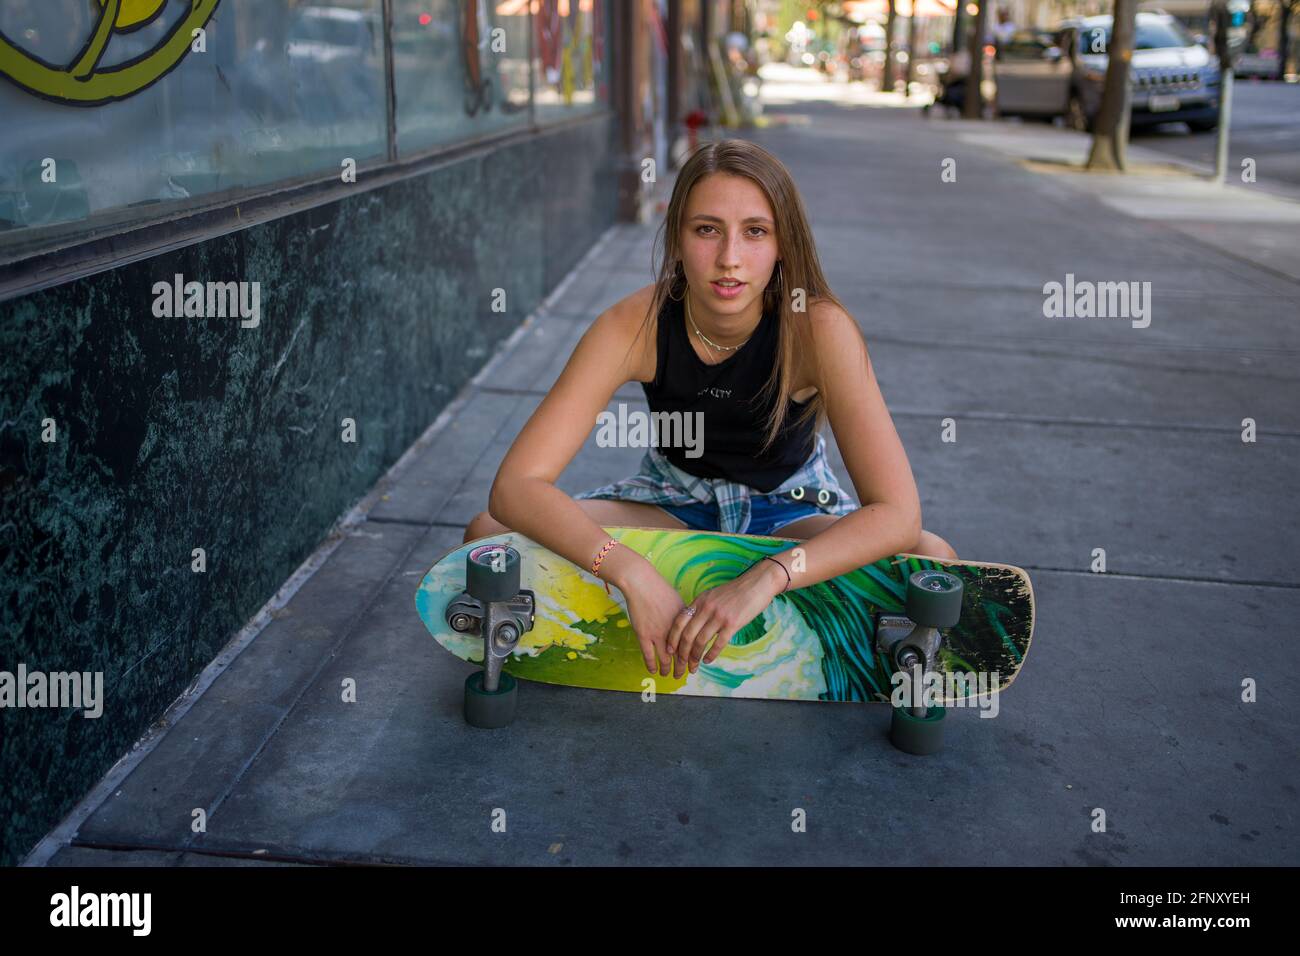 Junge Frau sitzt mit Skateboard in Downtown Urban Setting Stockfoto